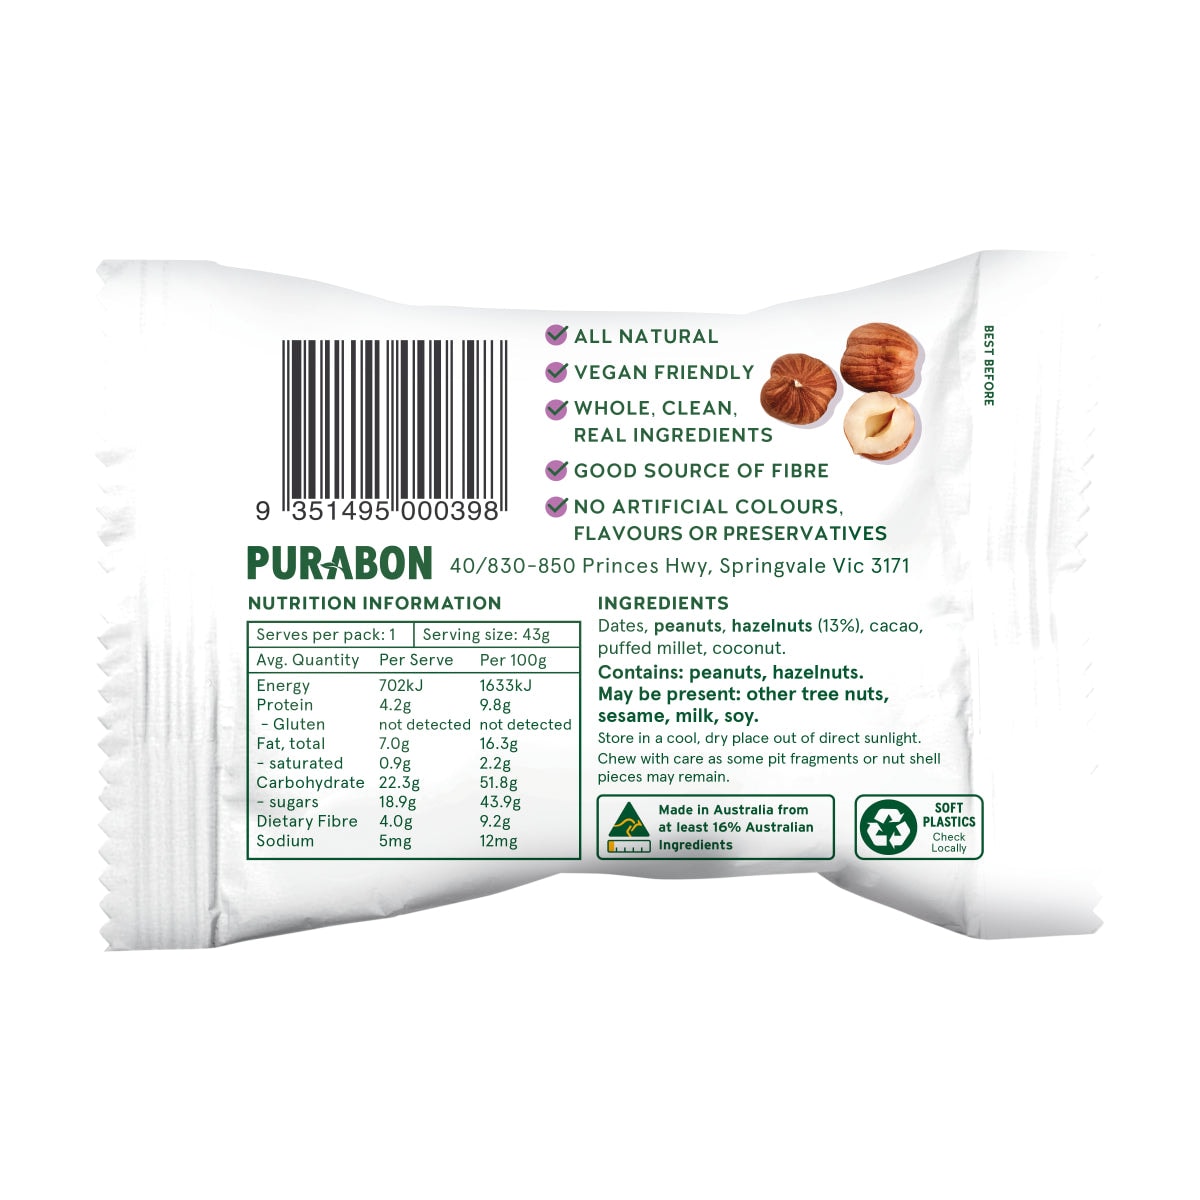 Purabon Protein Ball Hazelnut Cacao 43g